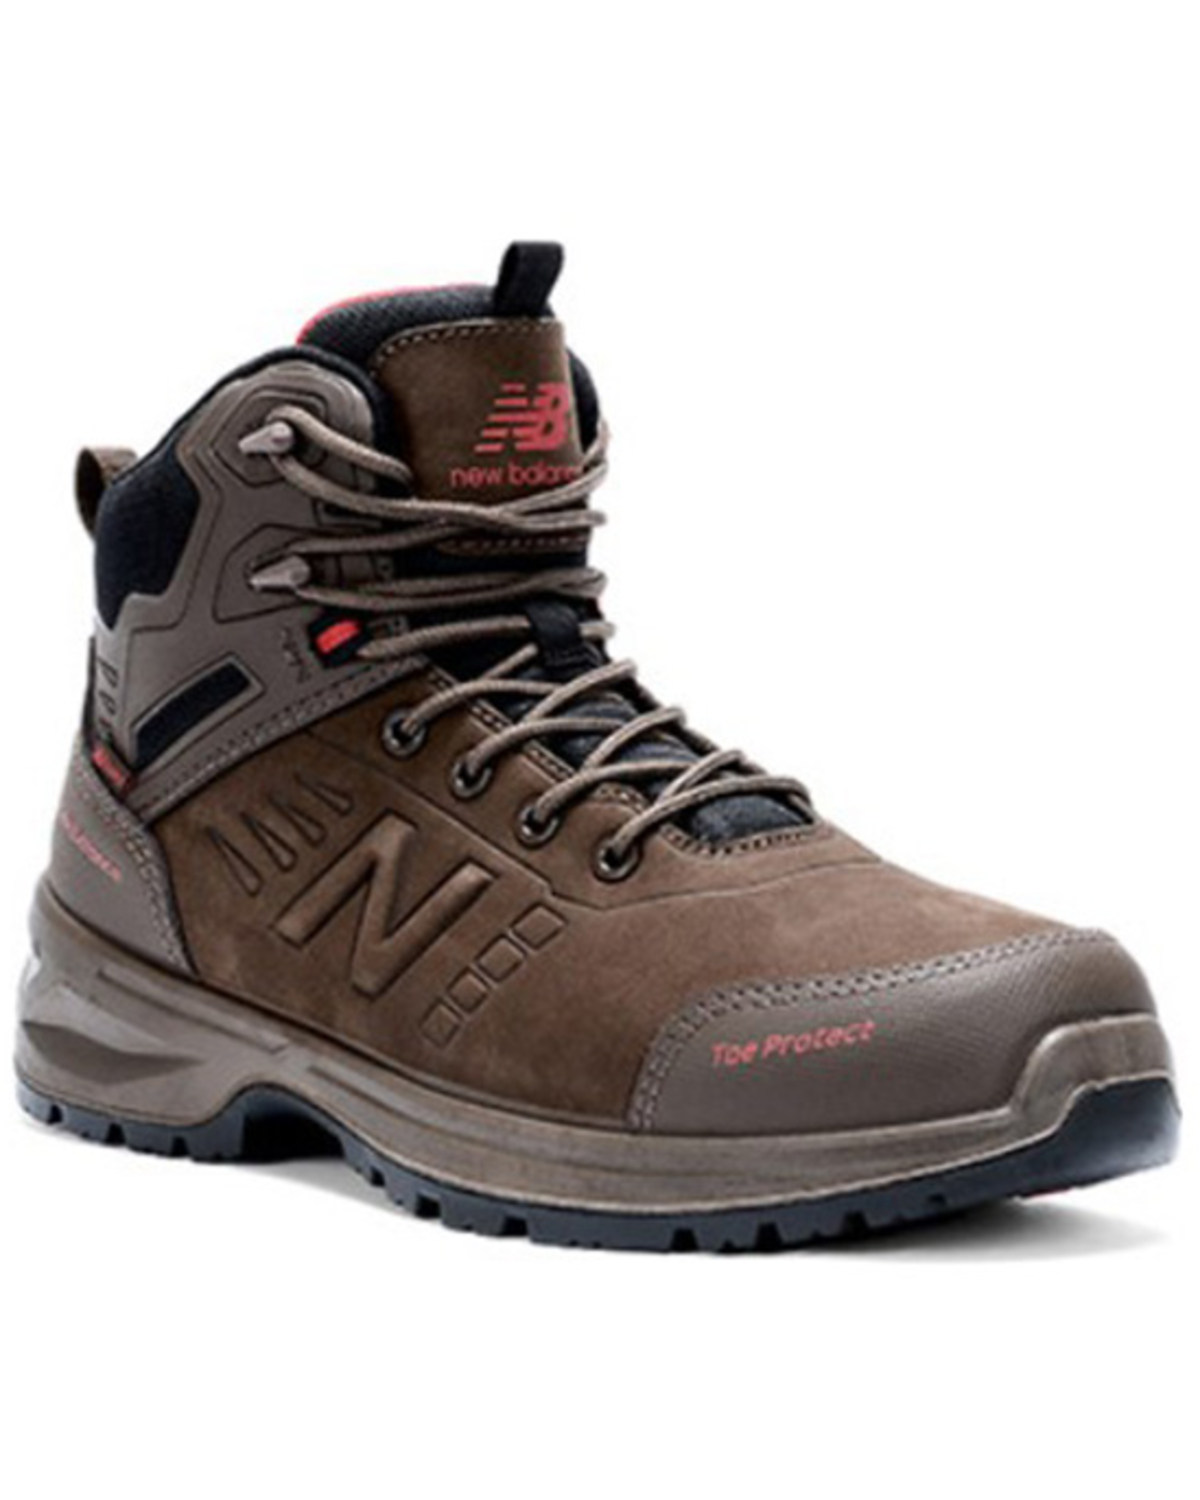 New Balance Men's Calibre Lace-Up Work Boots - Composite Toe